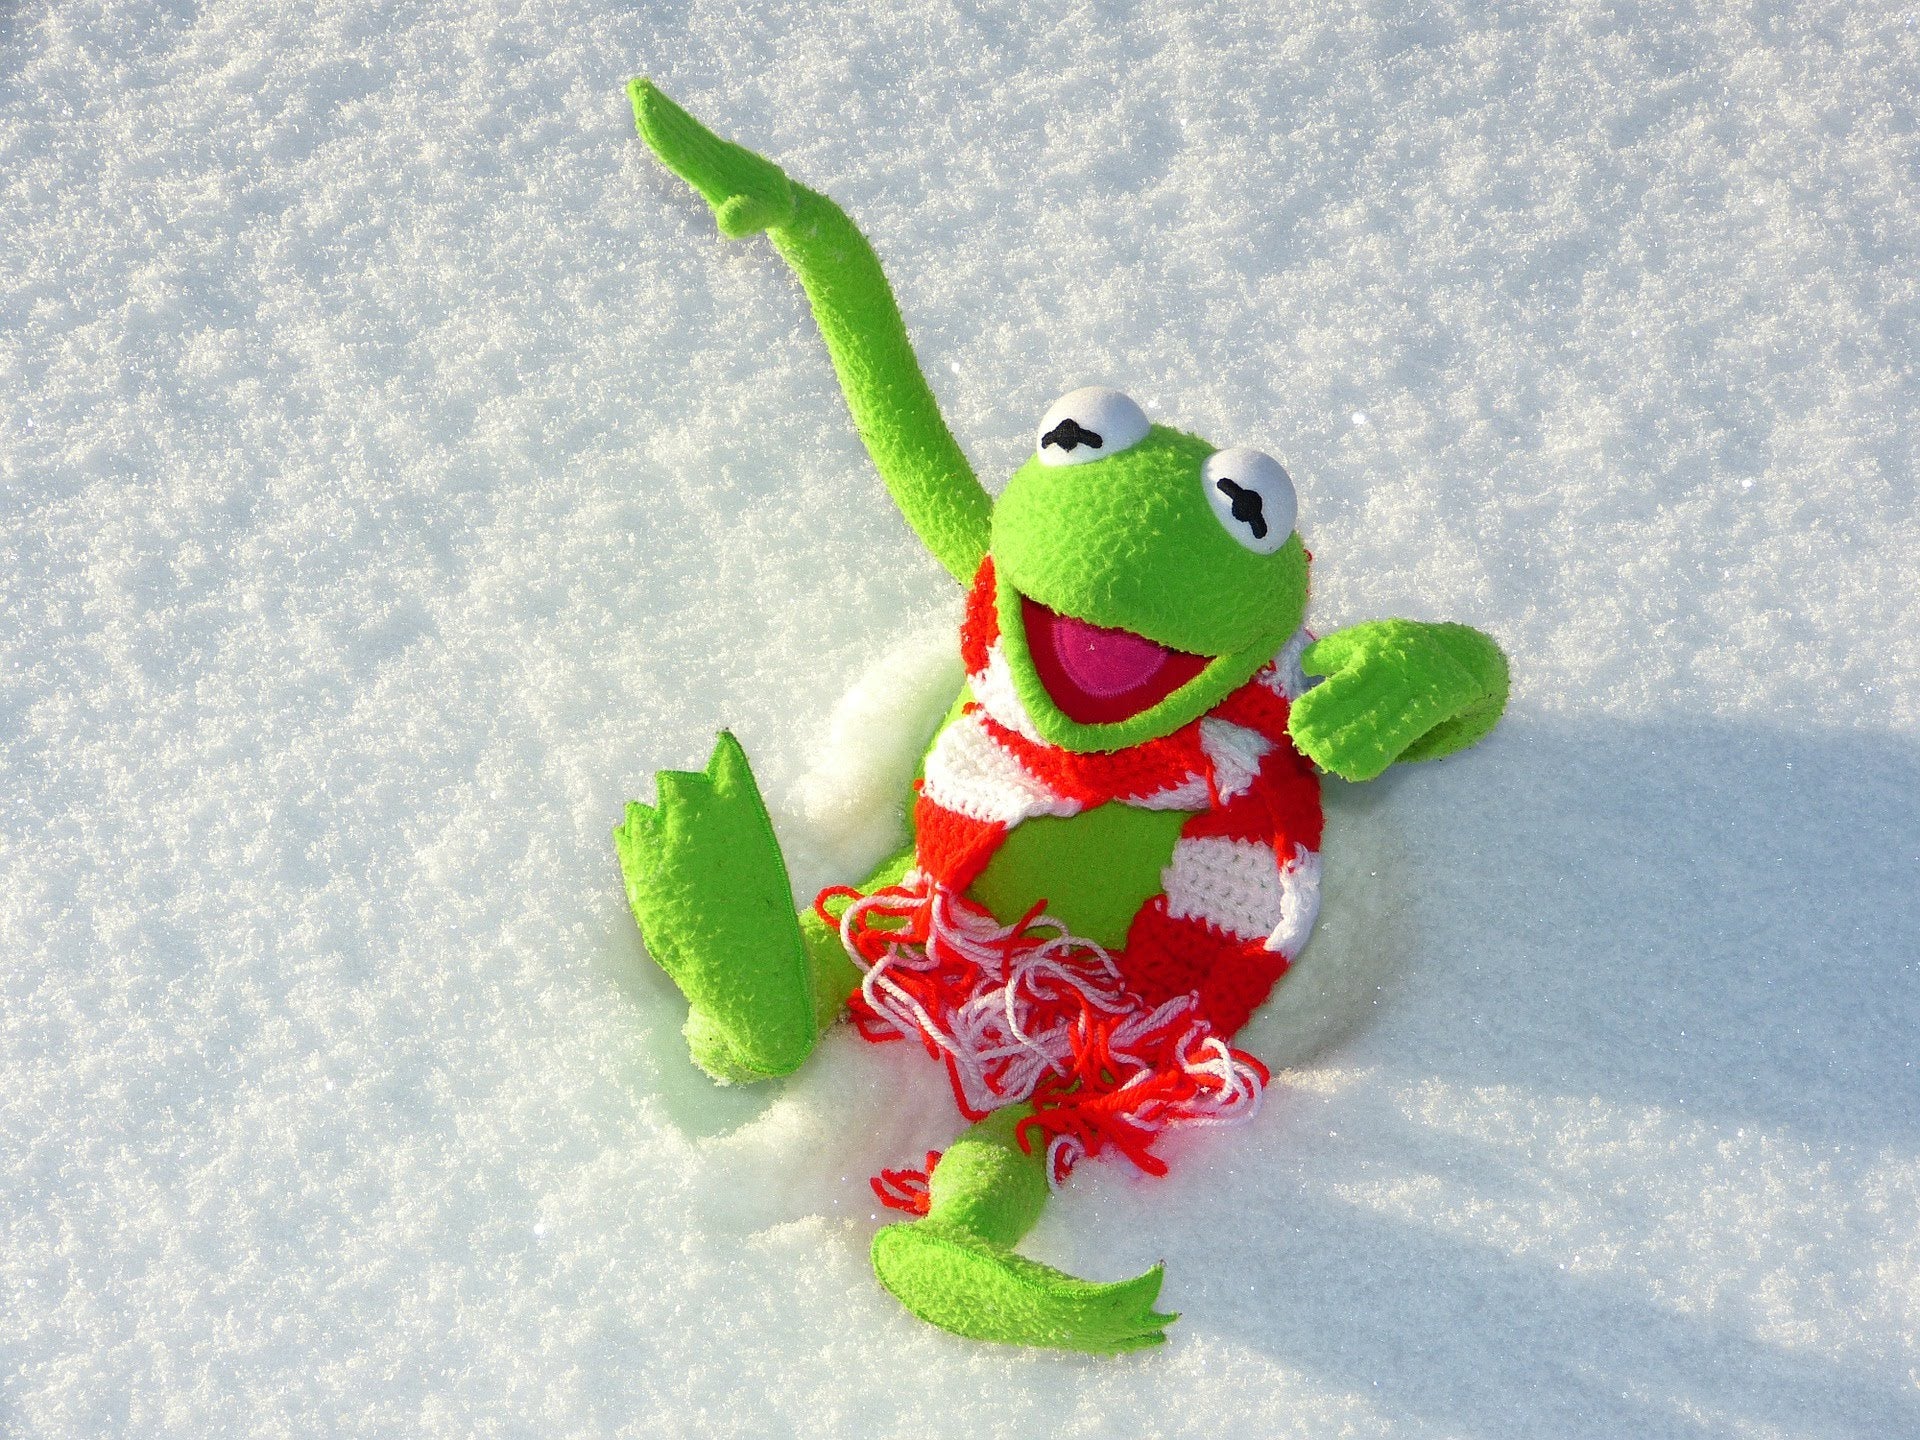 Kermit in the snow